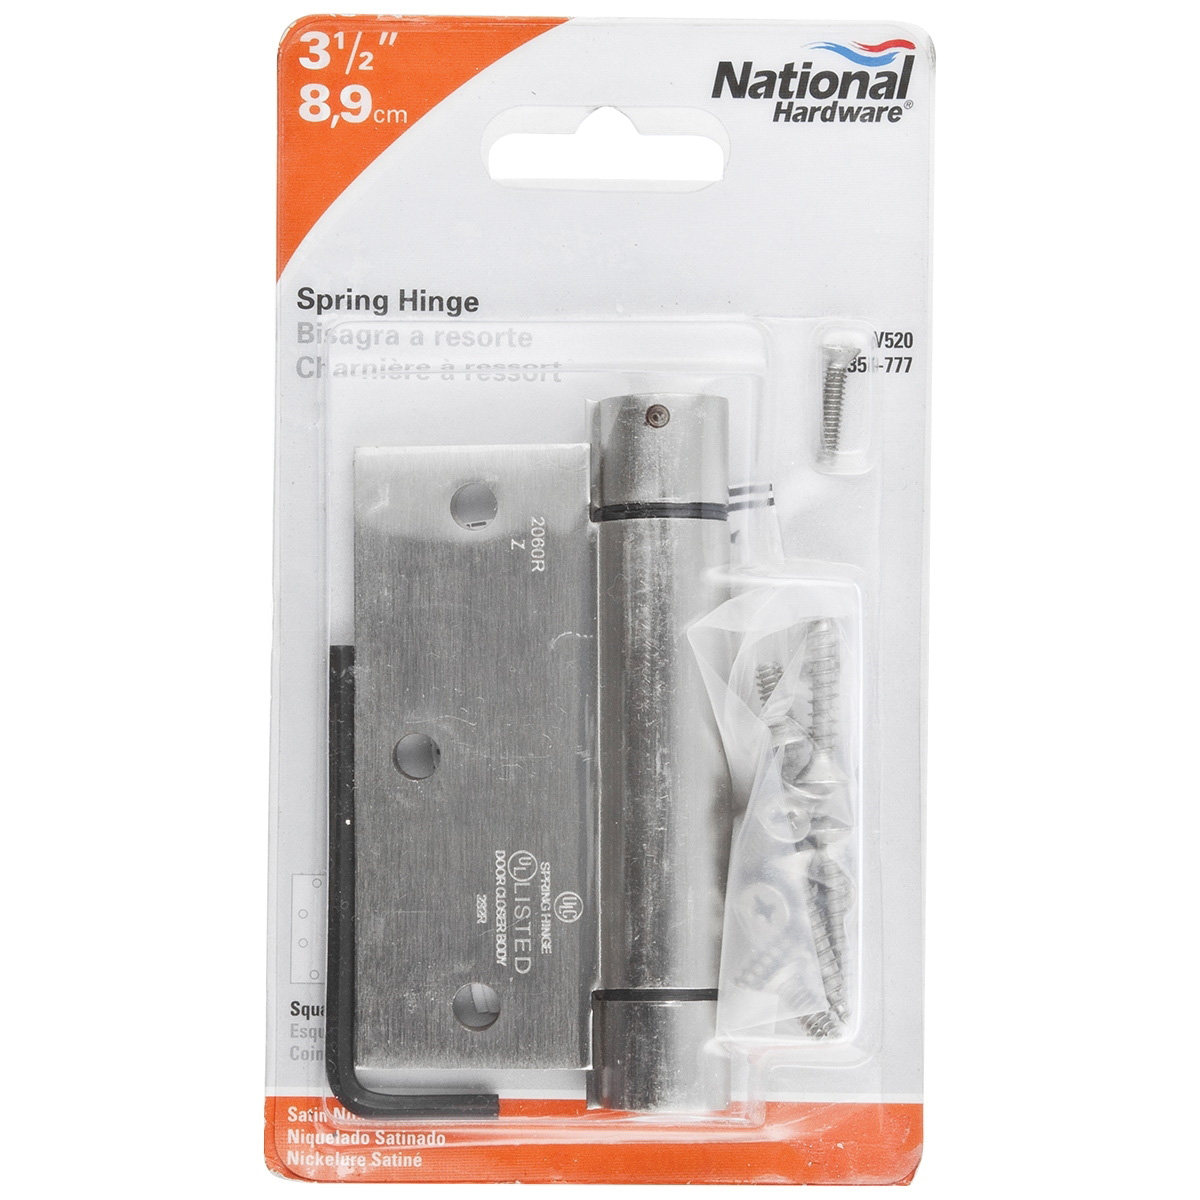 National Hardware N350-777